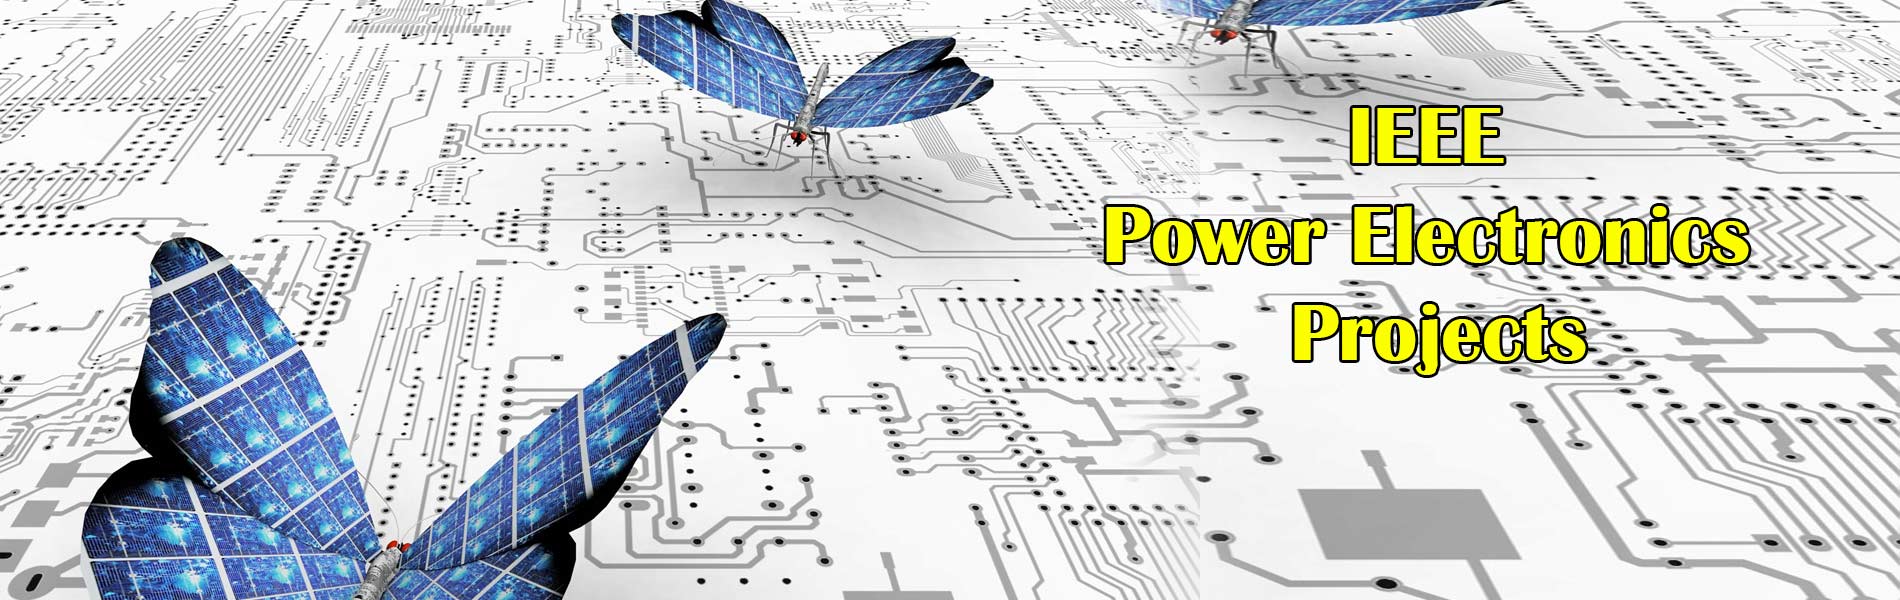 ieee-powerelectronics-finalyear-project-in-chennai